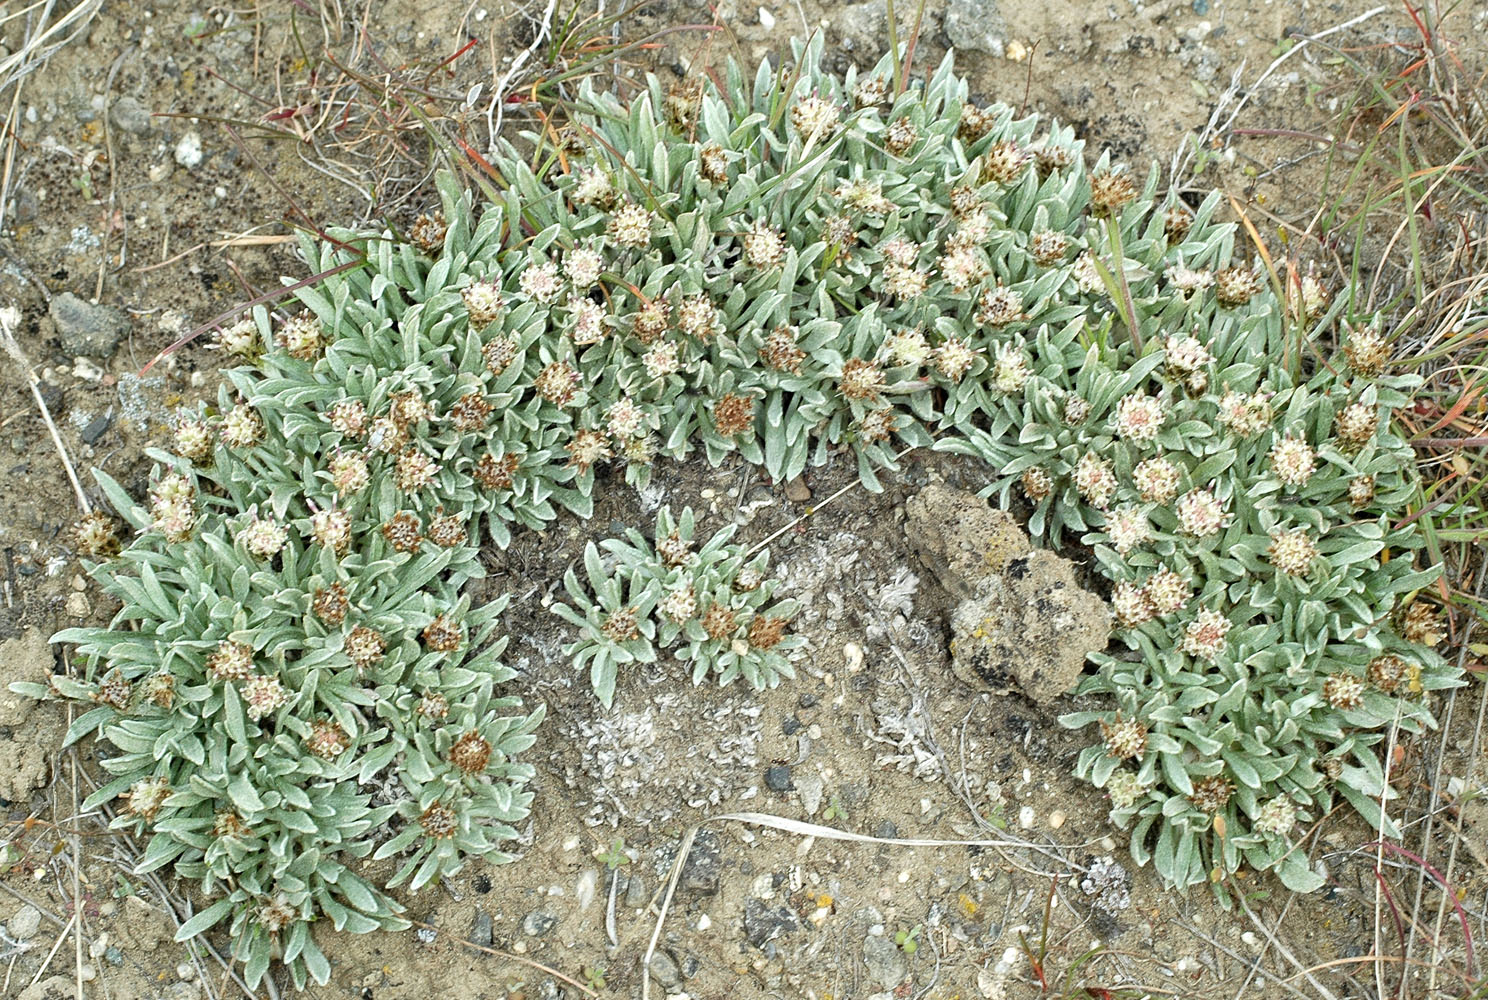 Flora of Eastern Washington Image: Antennaria dimorpha